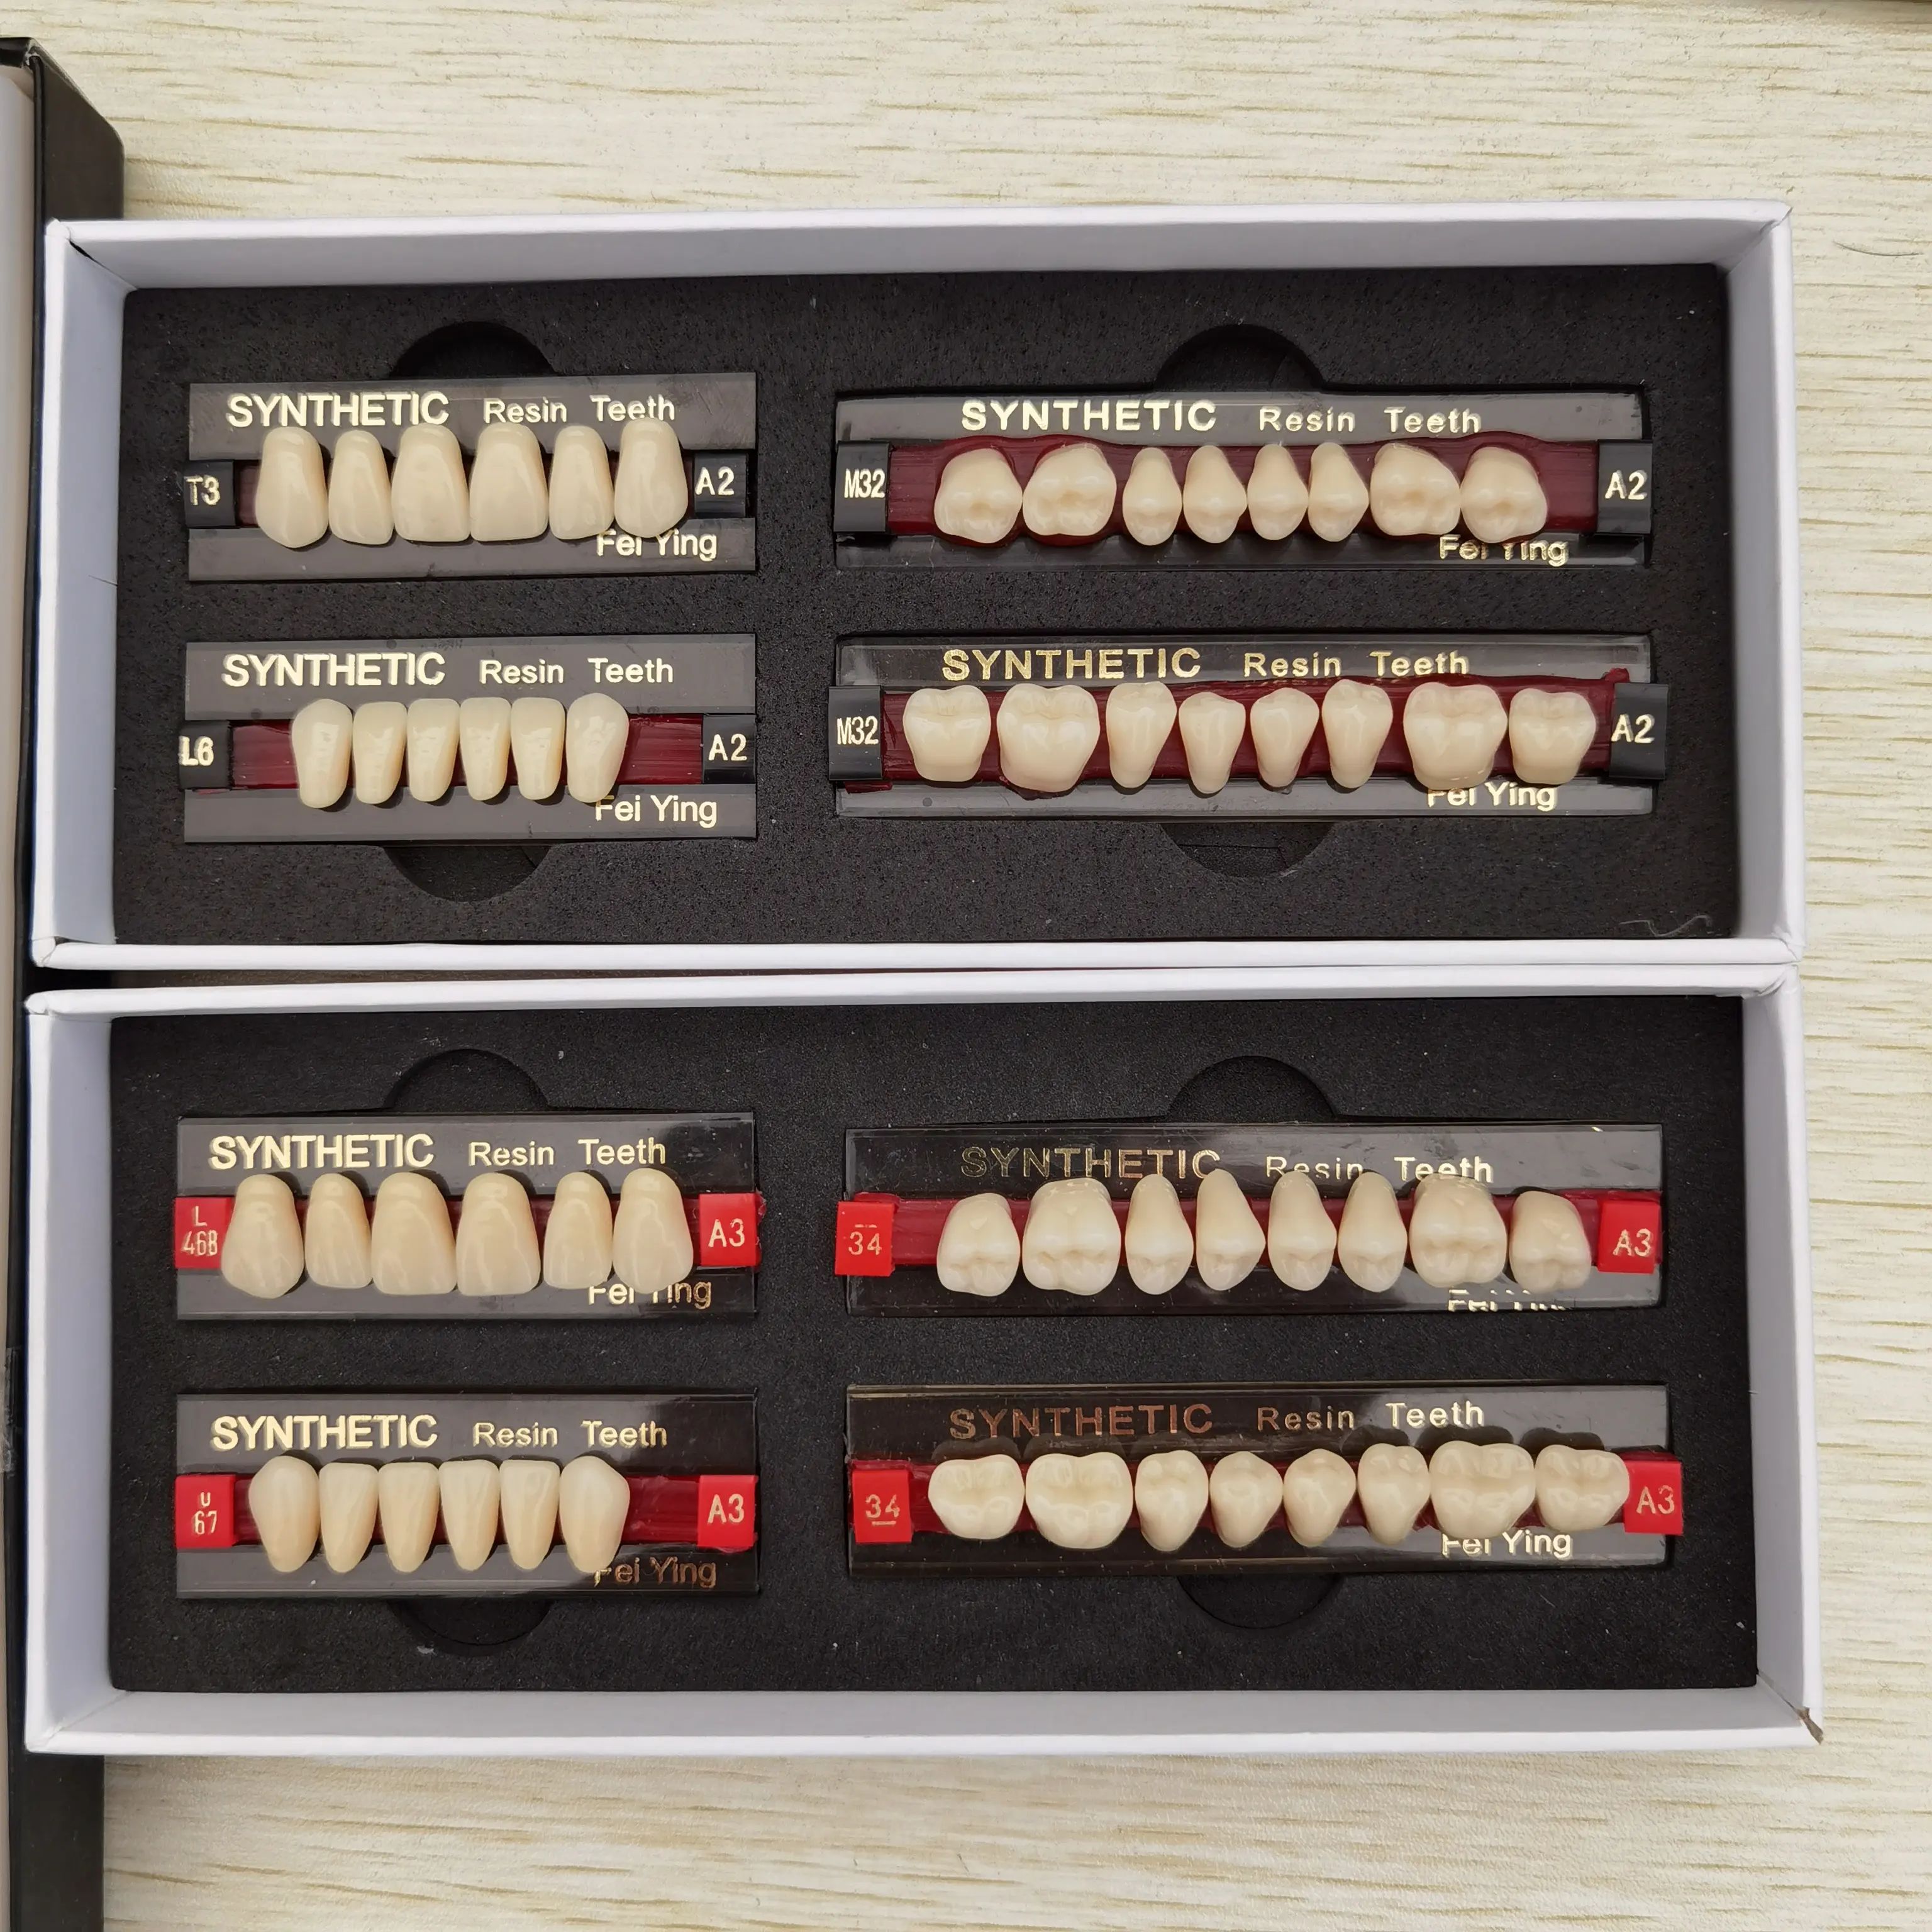 CE ISO อนุมัติทันตกรรมฟันเทียมคอมโพสิตฟันโพลิเมอร์สังเคราะห์สำหรับห้องปฏิบัติการทันตกรรม